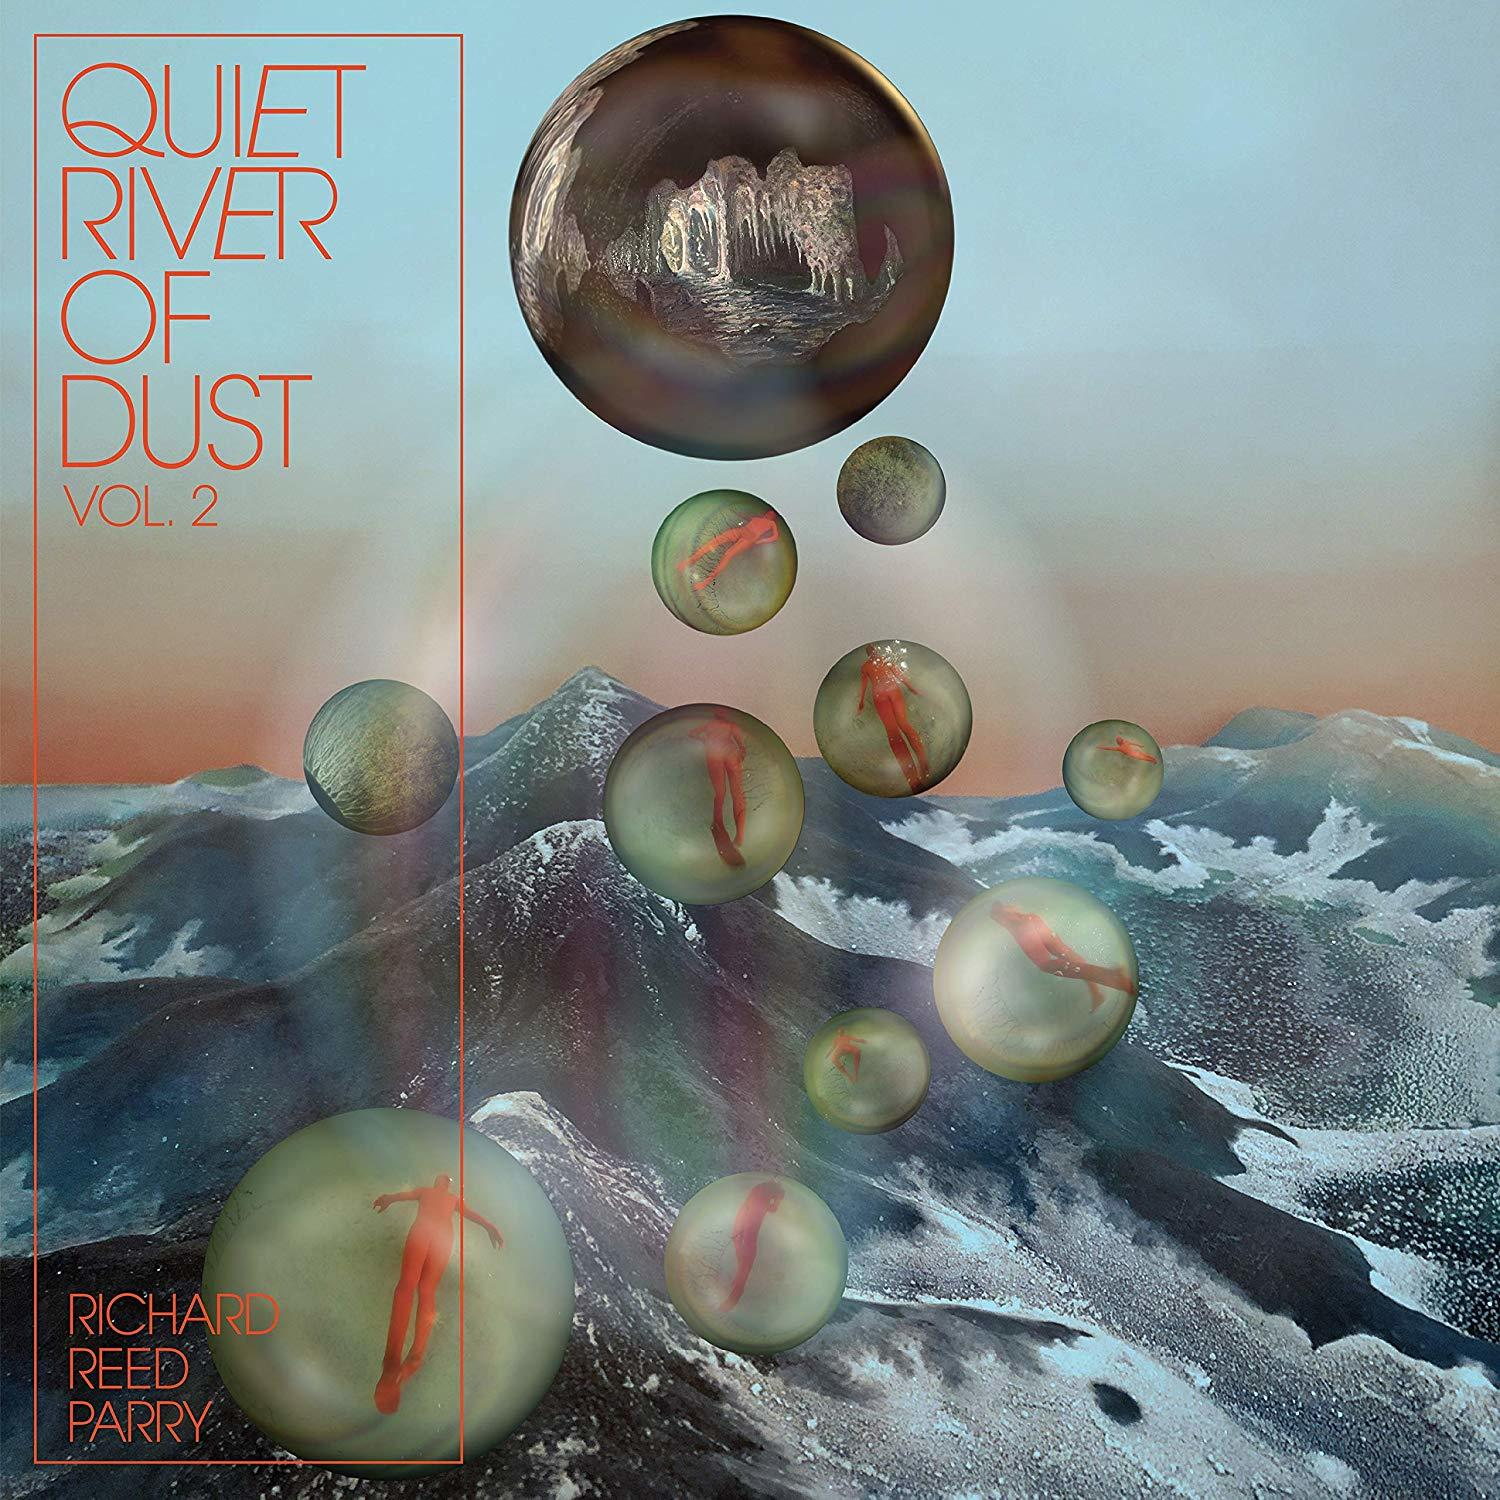 Richard Reed Parry - Quiet Vol.2 Dust - River (Vinyl) of